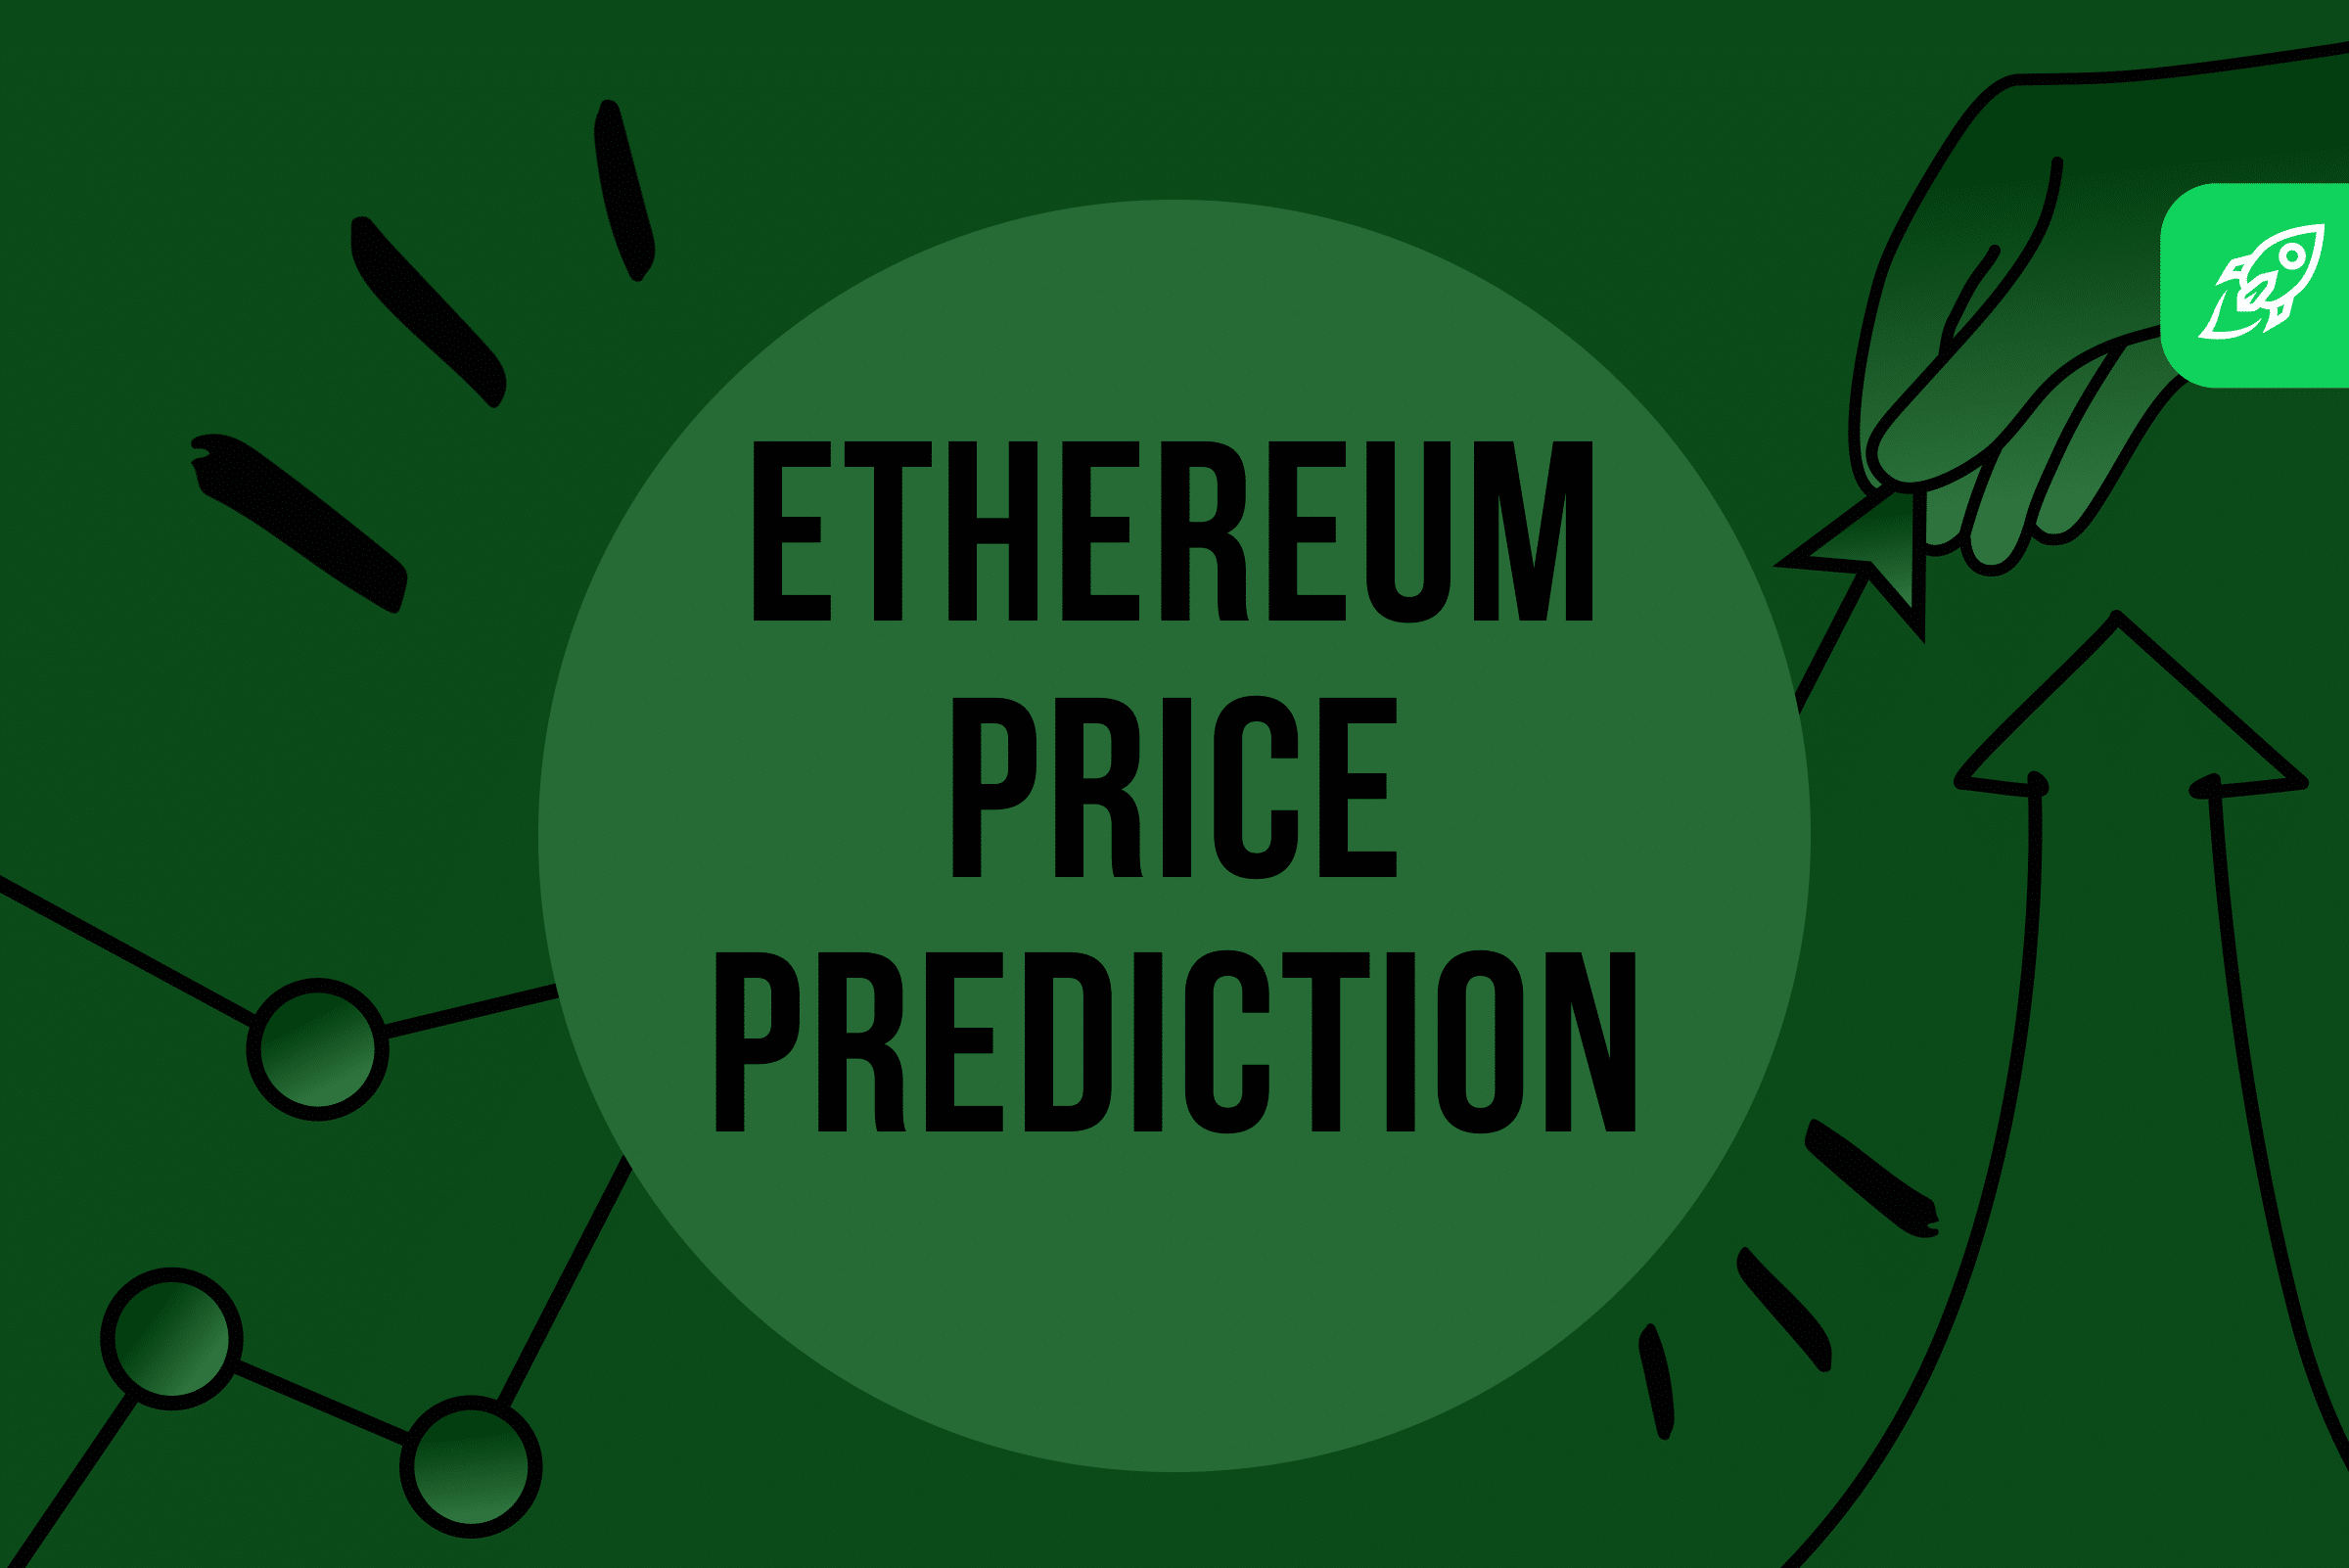 ethereum coin price prediction